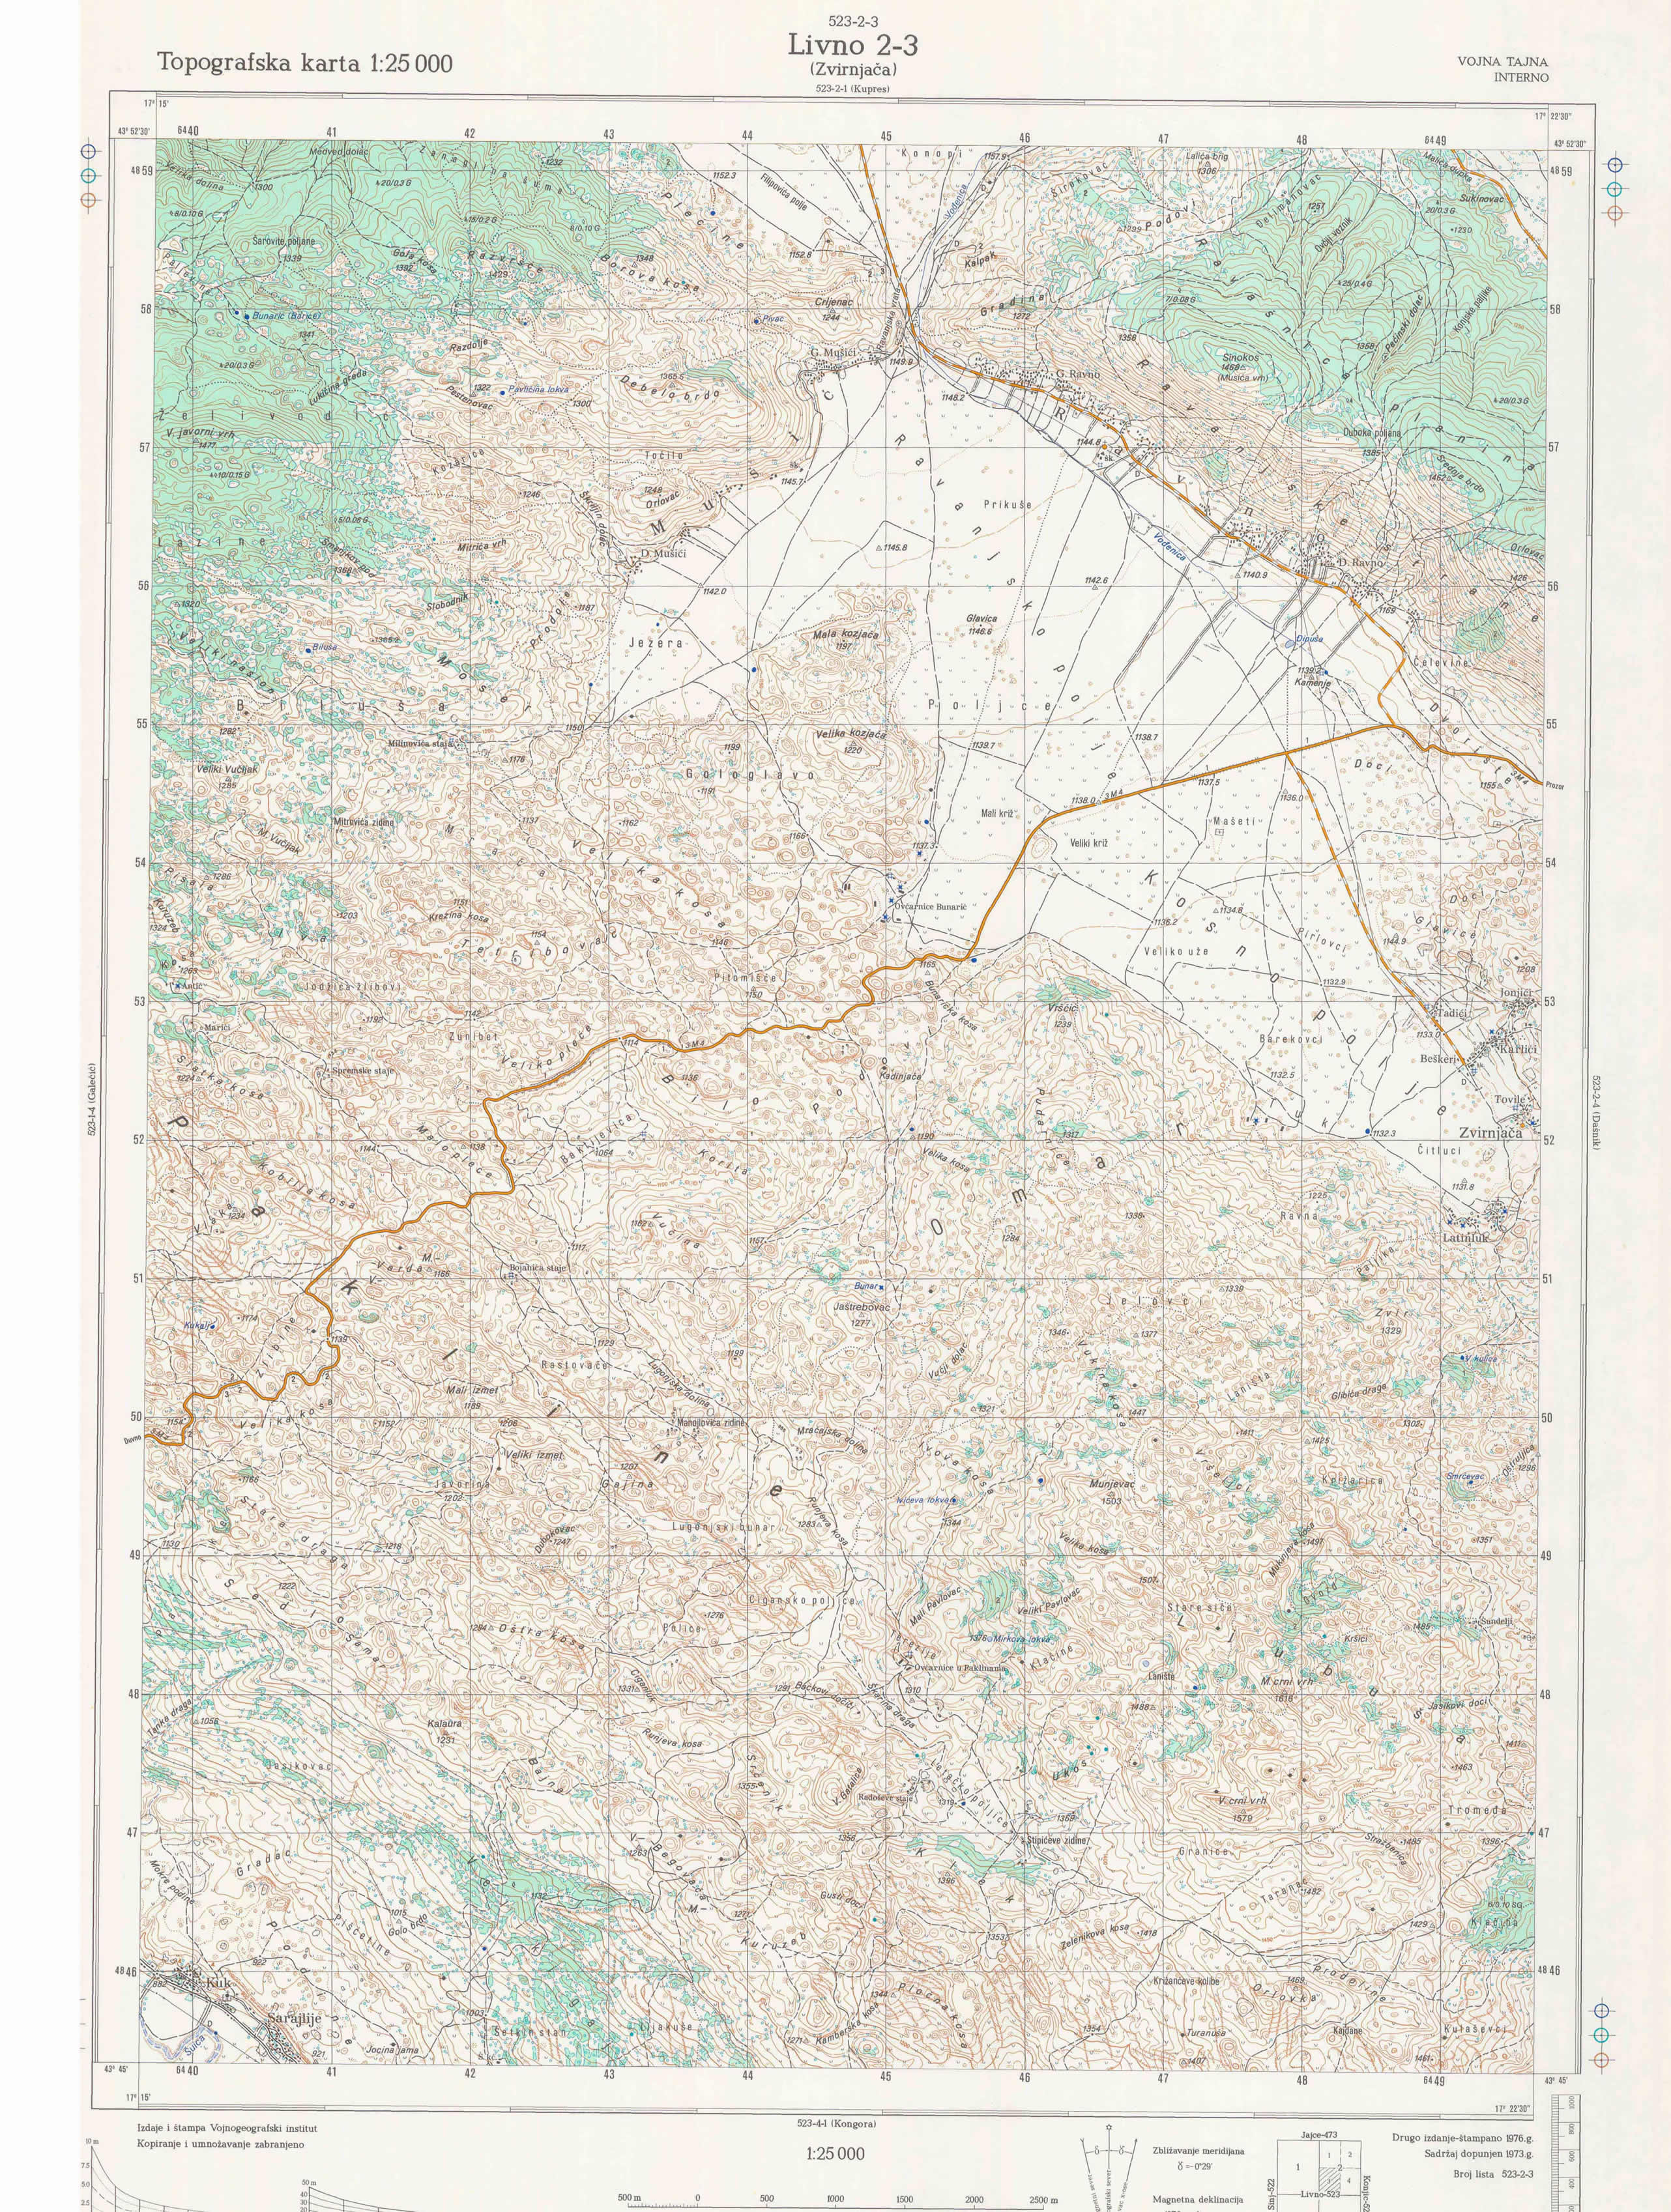  topografska karta BiH 25000 JNA  Zvirnjaca